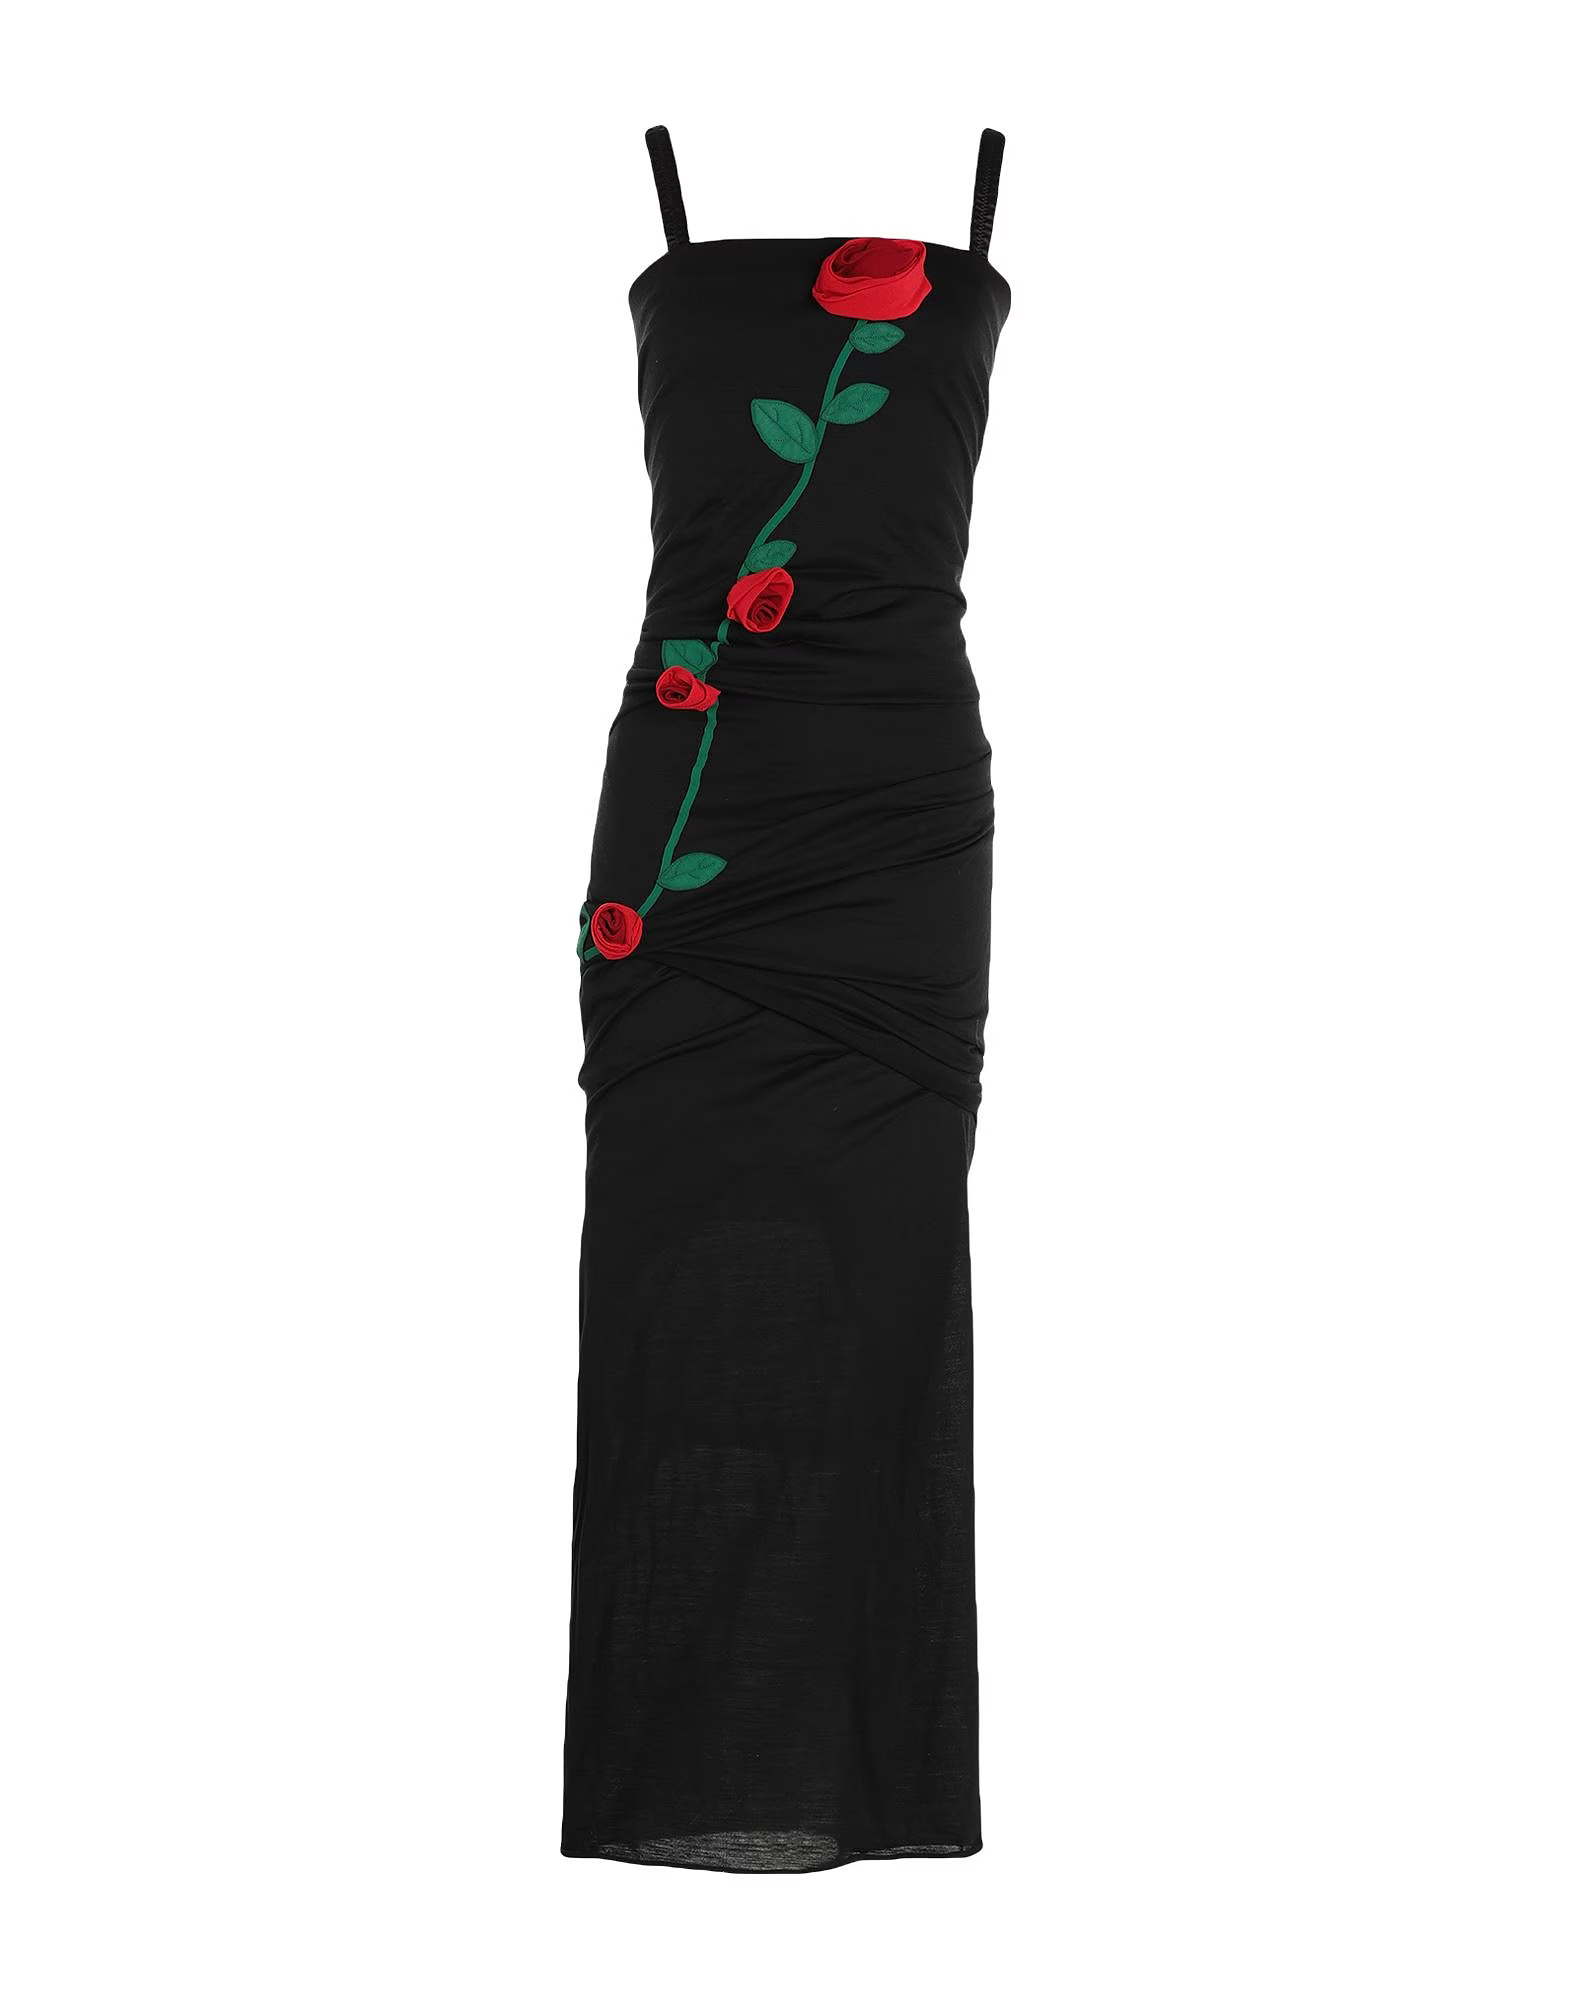 Dolce & Gabbana + Black Rose Strappy Dress